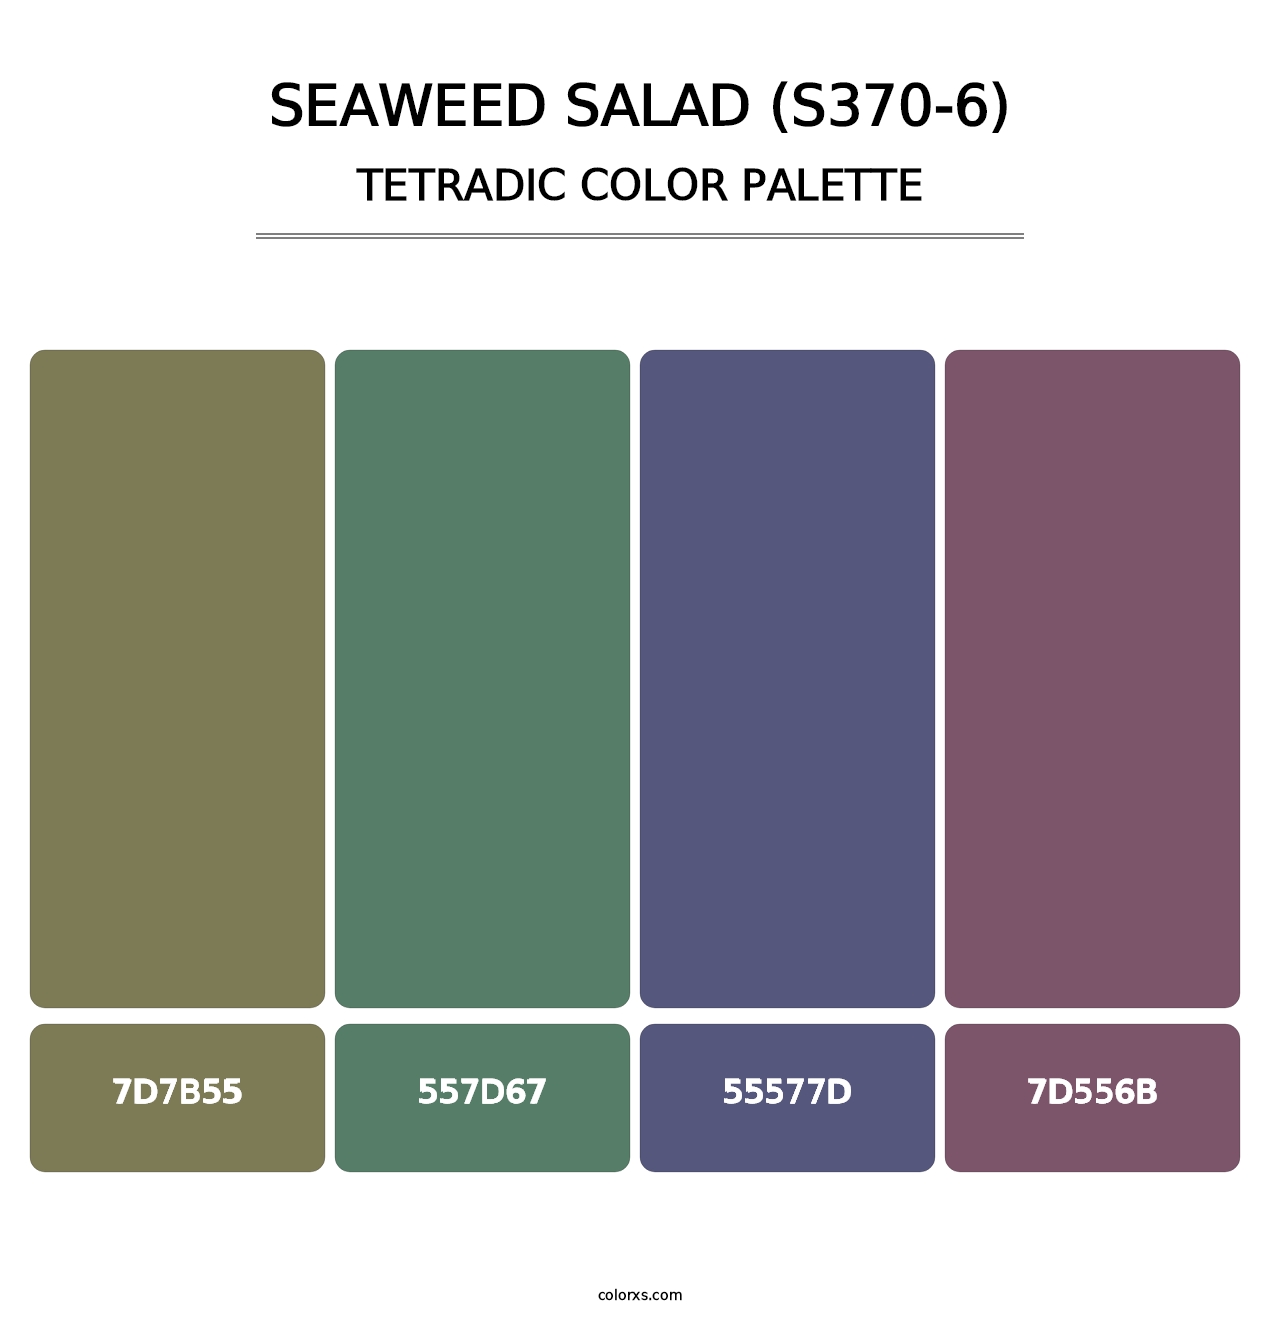 Seaweed Salad (S370-6) - Tetradic Color Palette